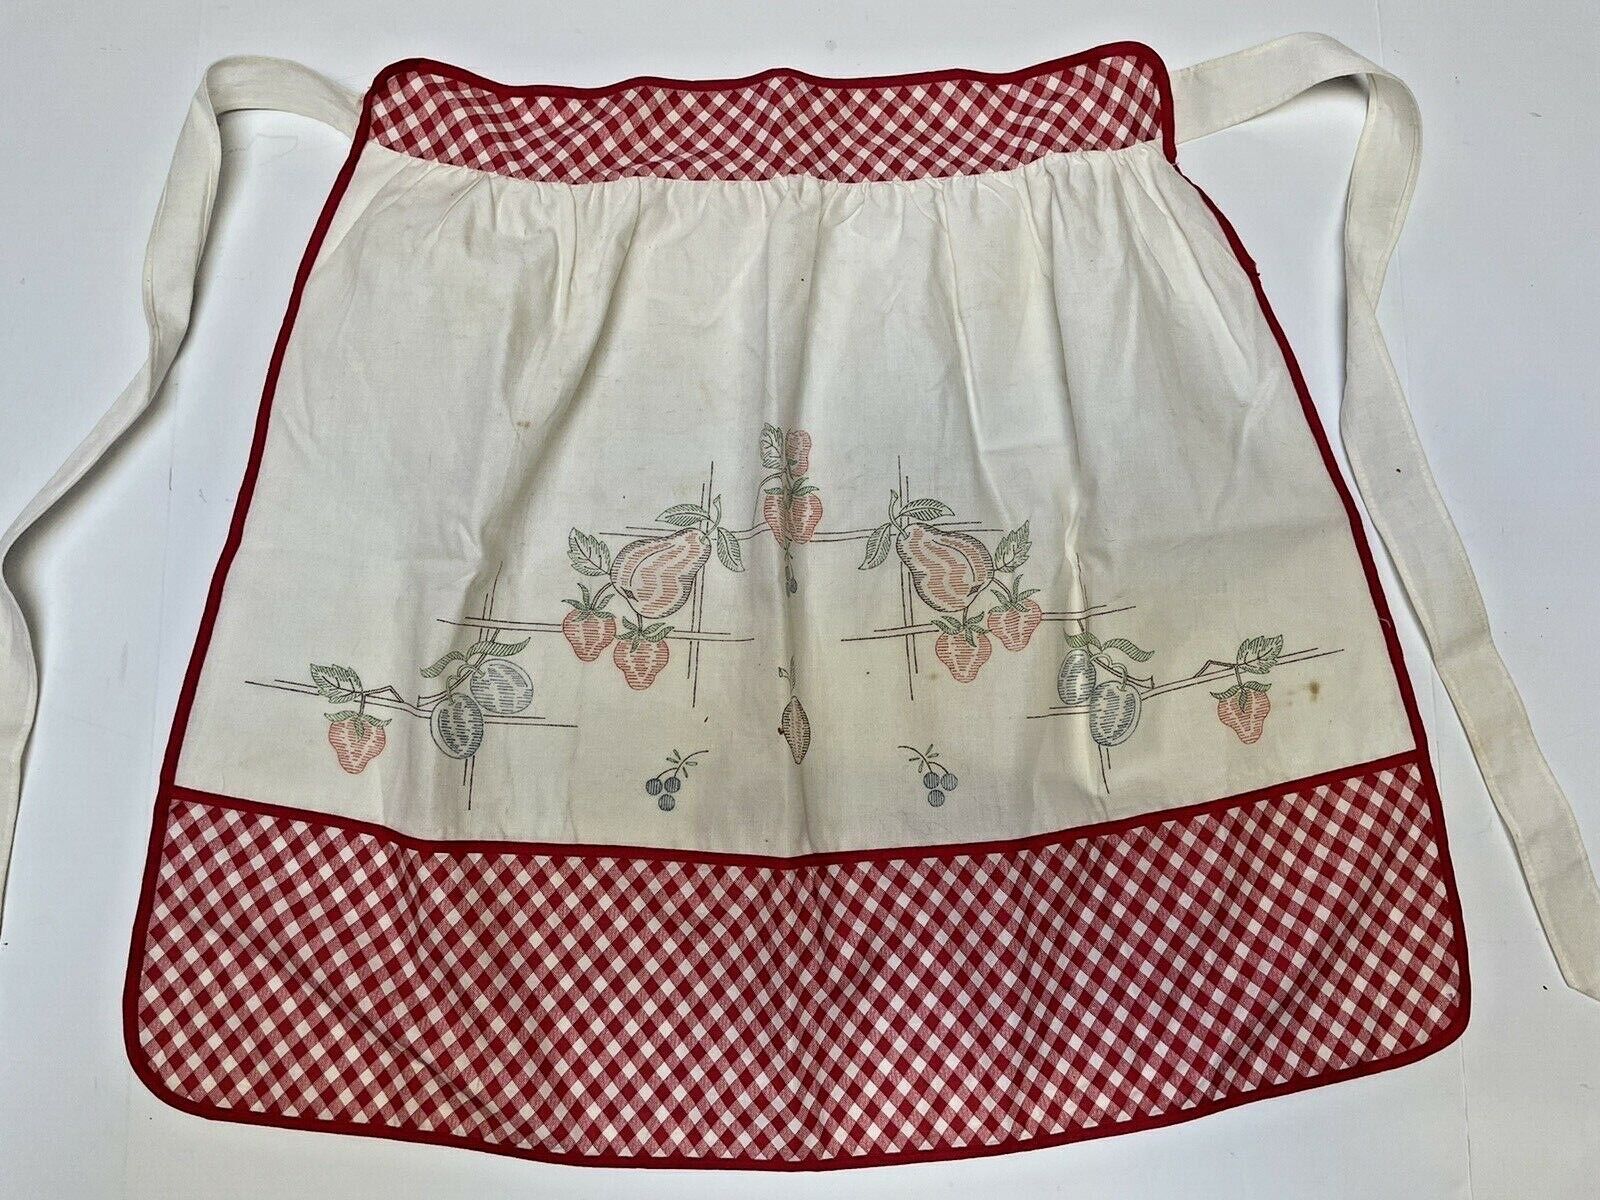 Vintage Kitchen Apron Cotton Floral Embroider 21x25 in Gingham Print Trim MCM  